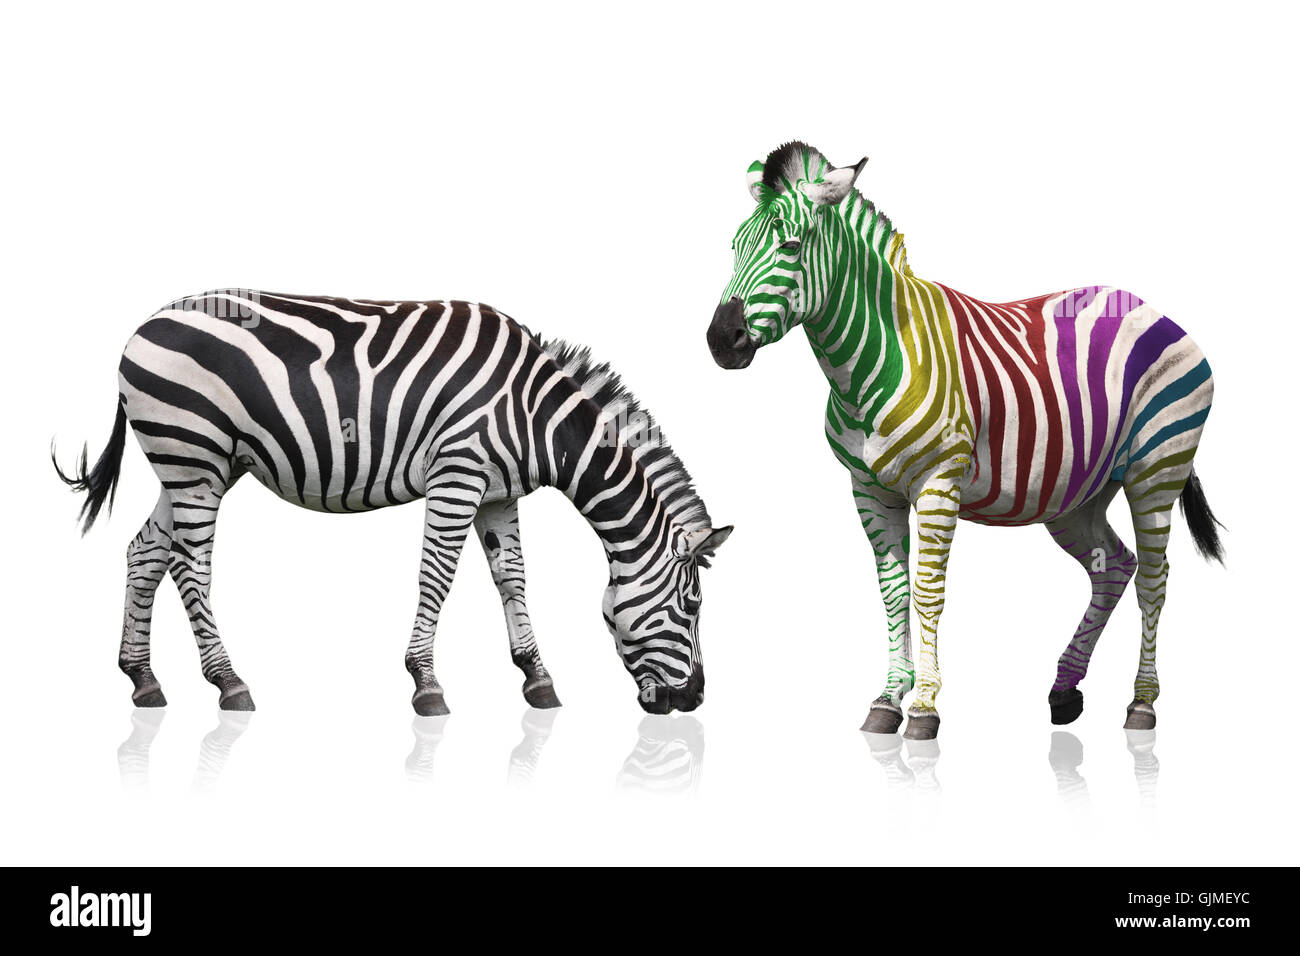 13,906 Rainbow Zebras Images, Stock Photos, 3D objects, & Vectors